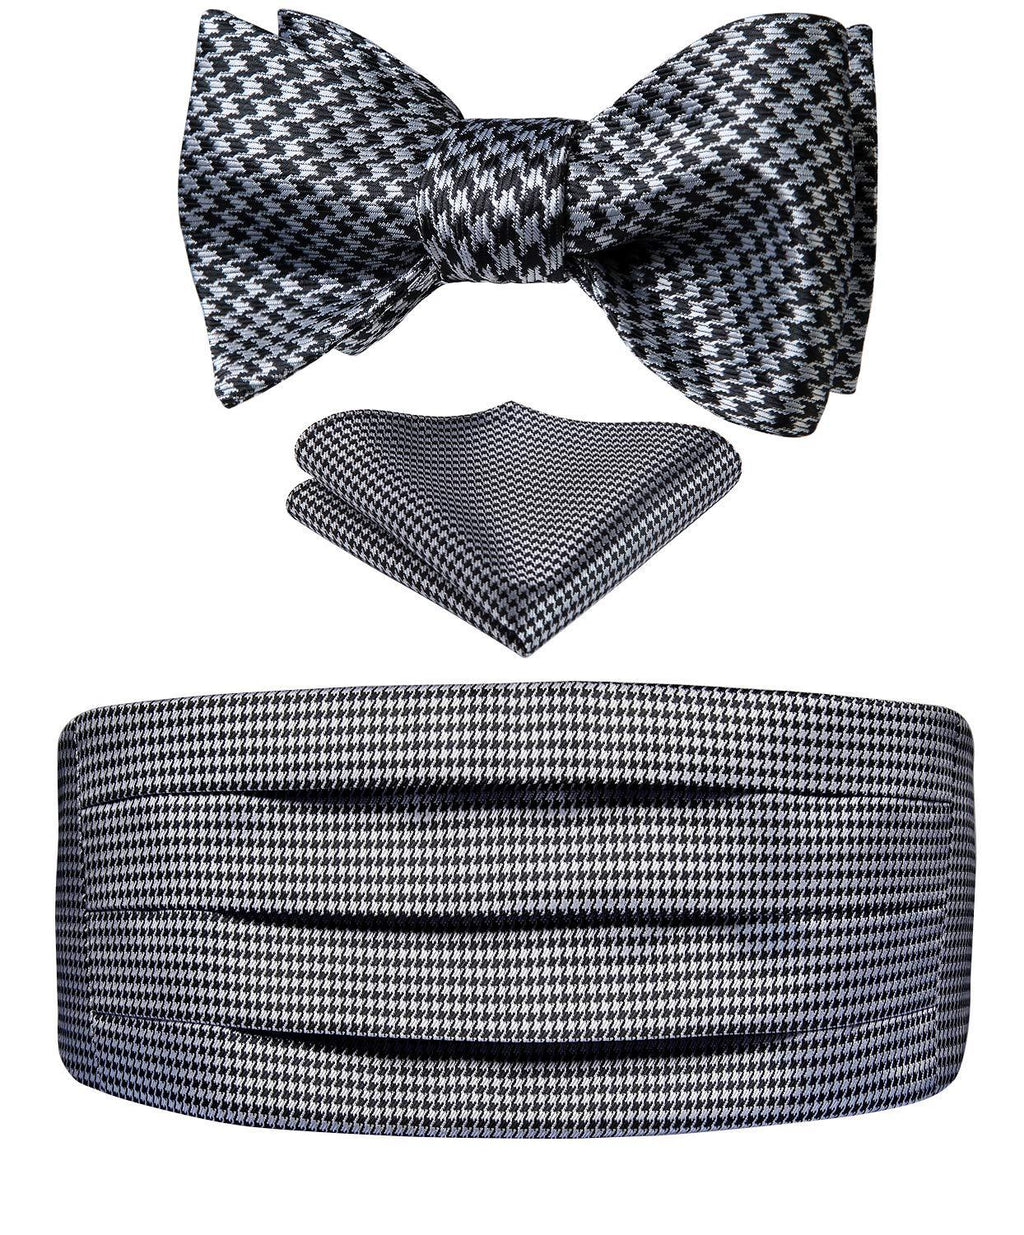 [Australia] - HISDERN men's formal Cummerbund with bow tie and pocket square adjustable suit wedding party suit Silver&black One Size 